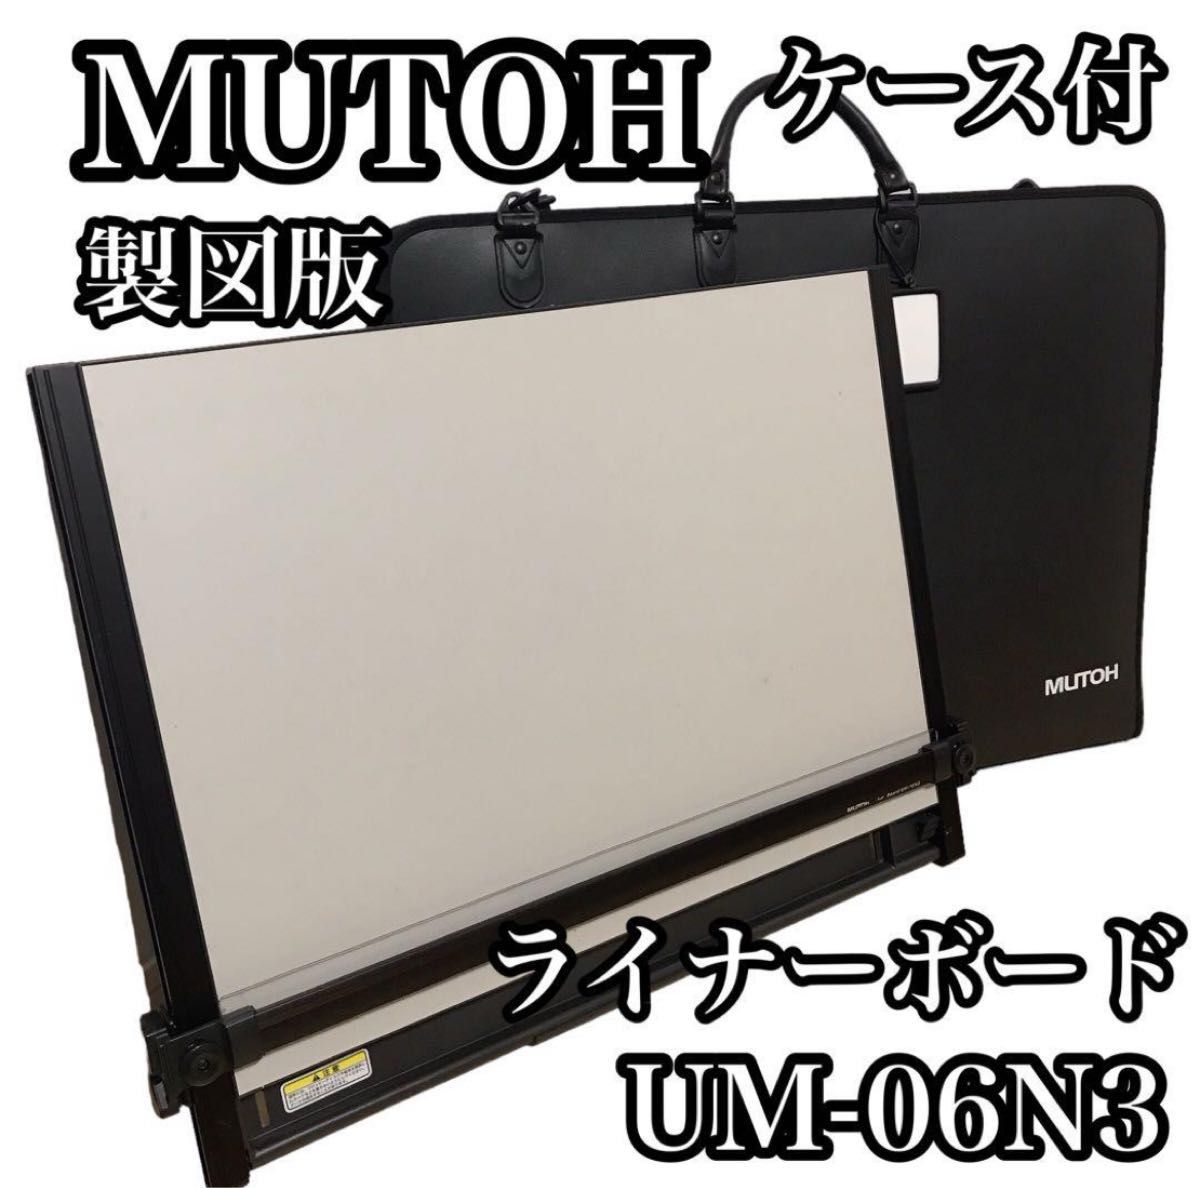 MUTOH ライナーボード UM-06N3 A2 平行定規